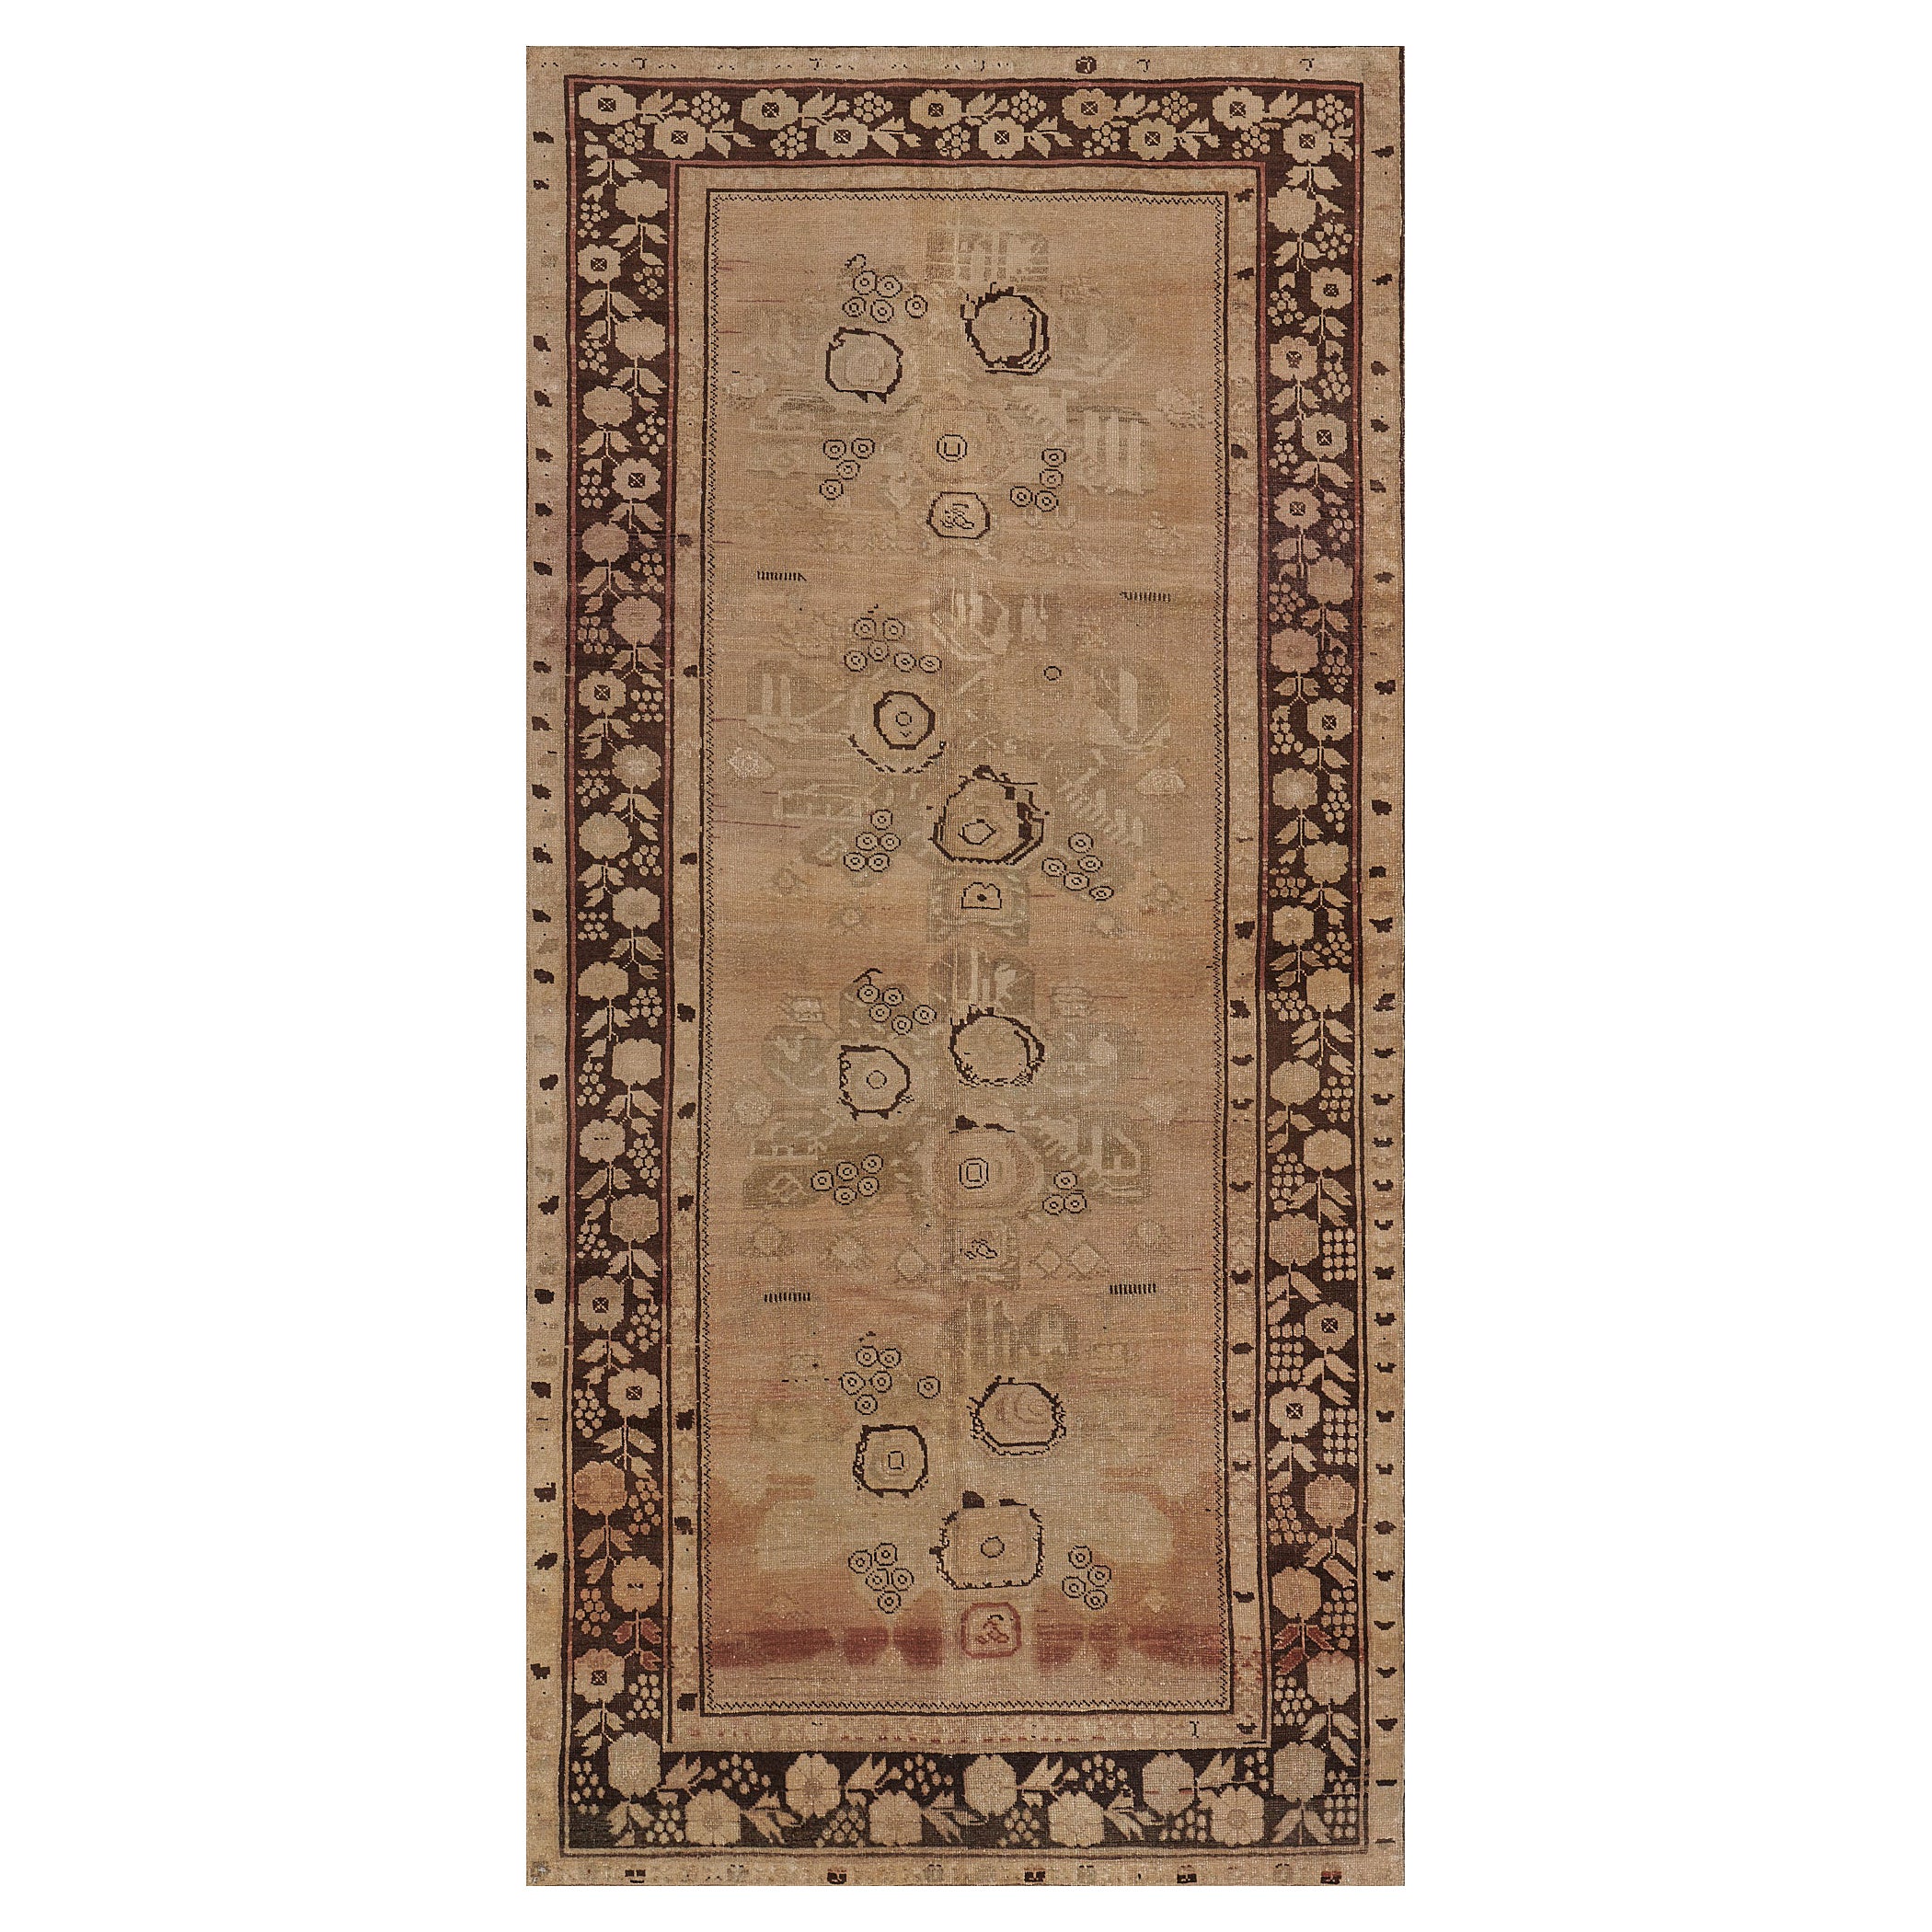 Antiker CIRCA-1900 Karabagh-Teppich aus geblümter Wolle